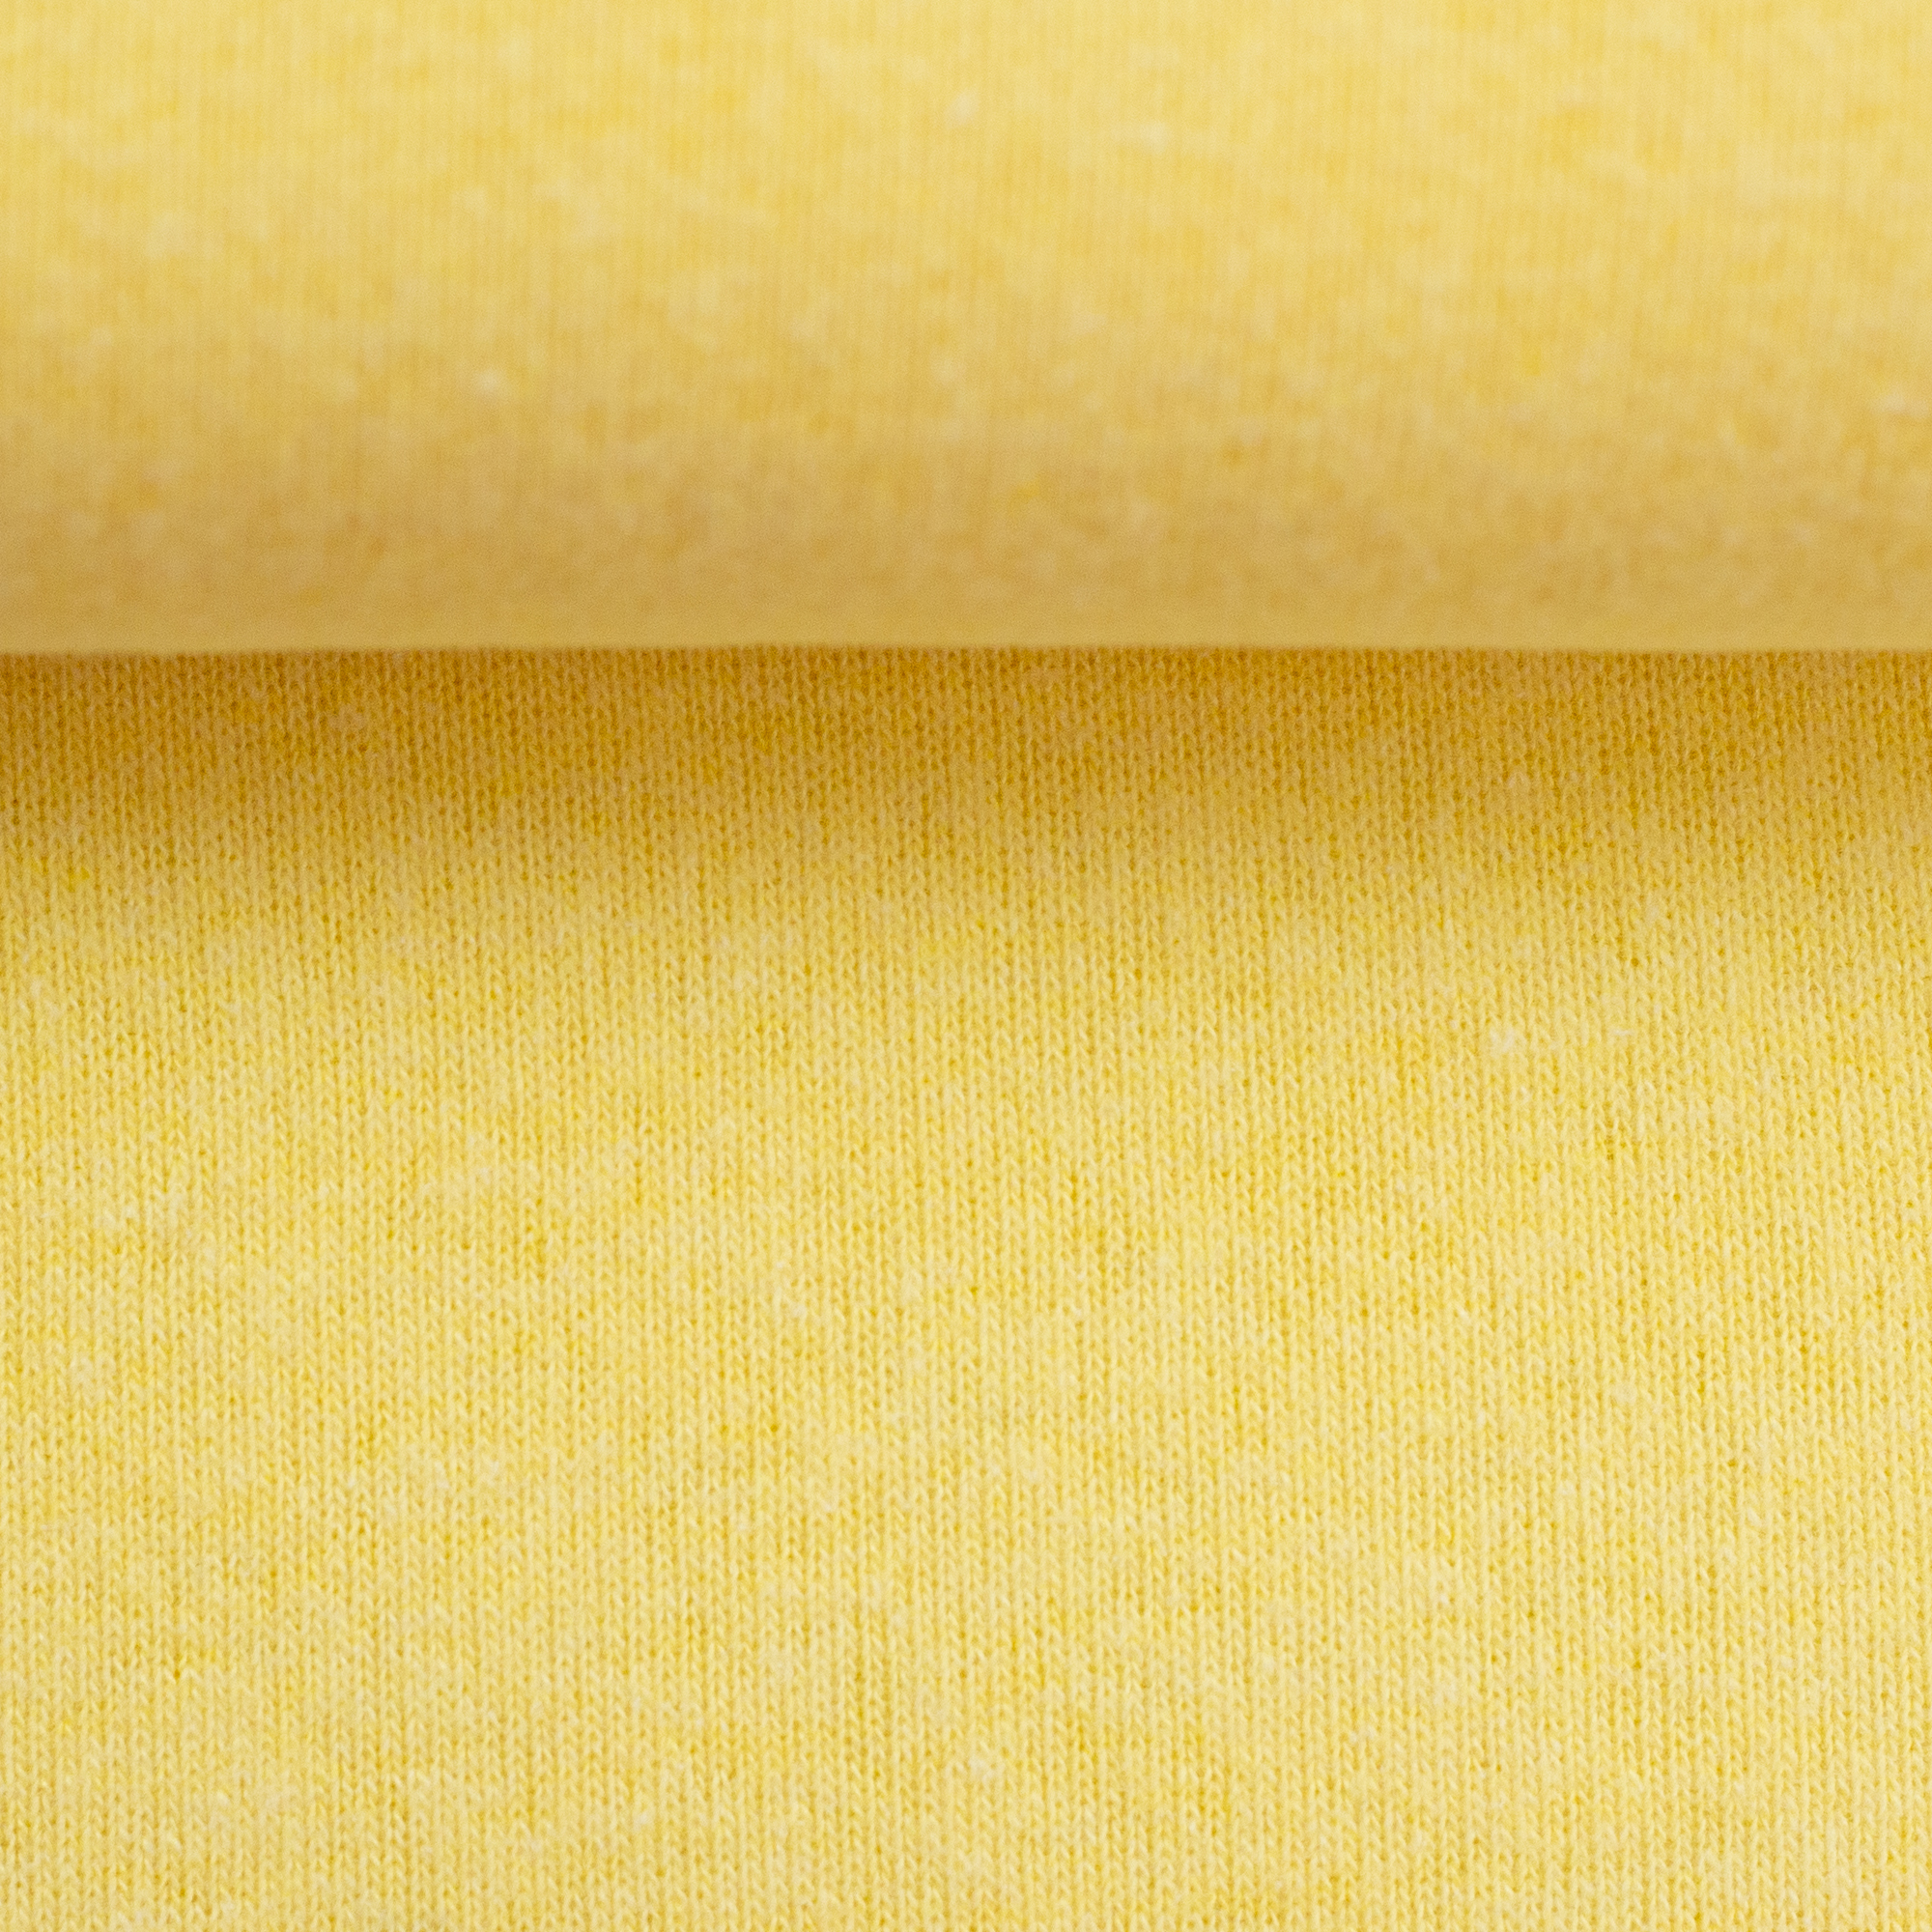 Strickstoff Bene gelb, angerauht, Made in Italy